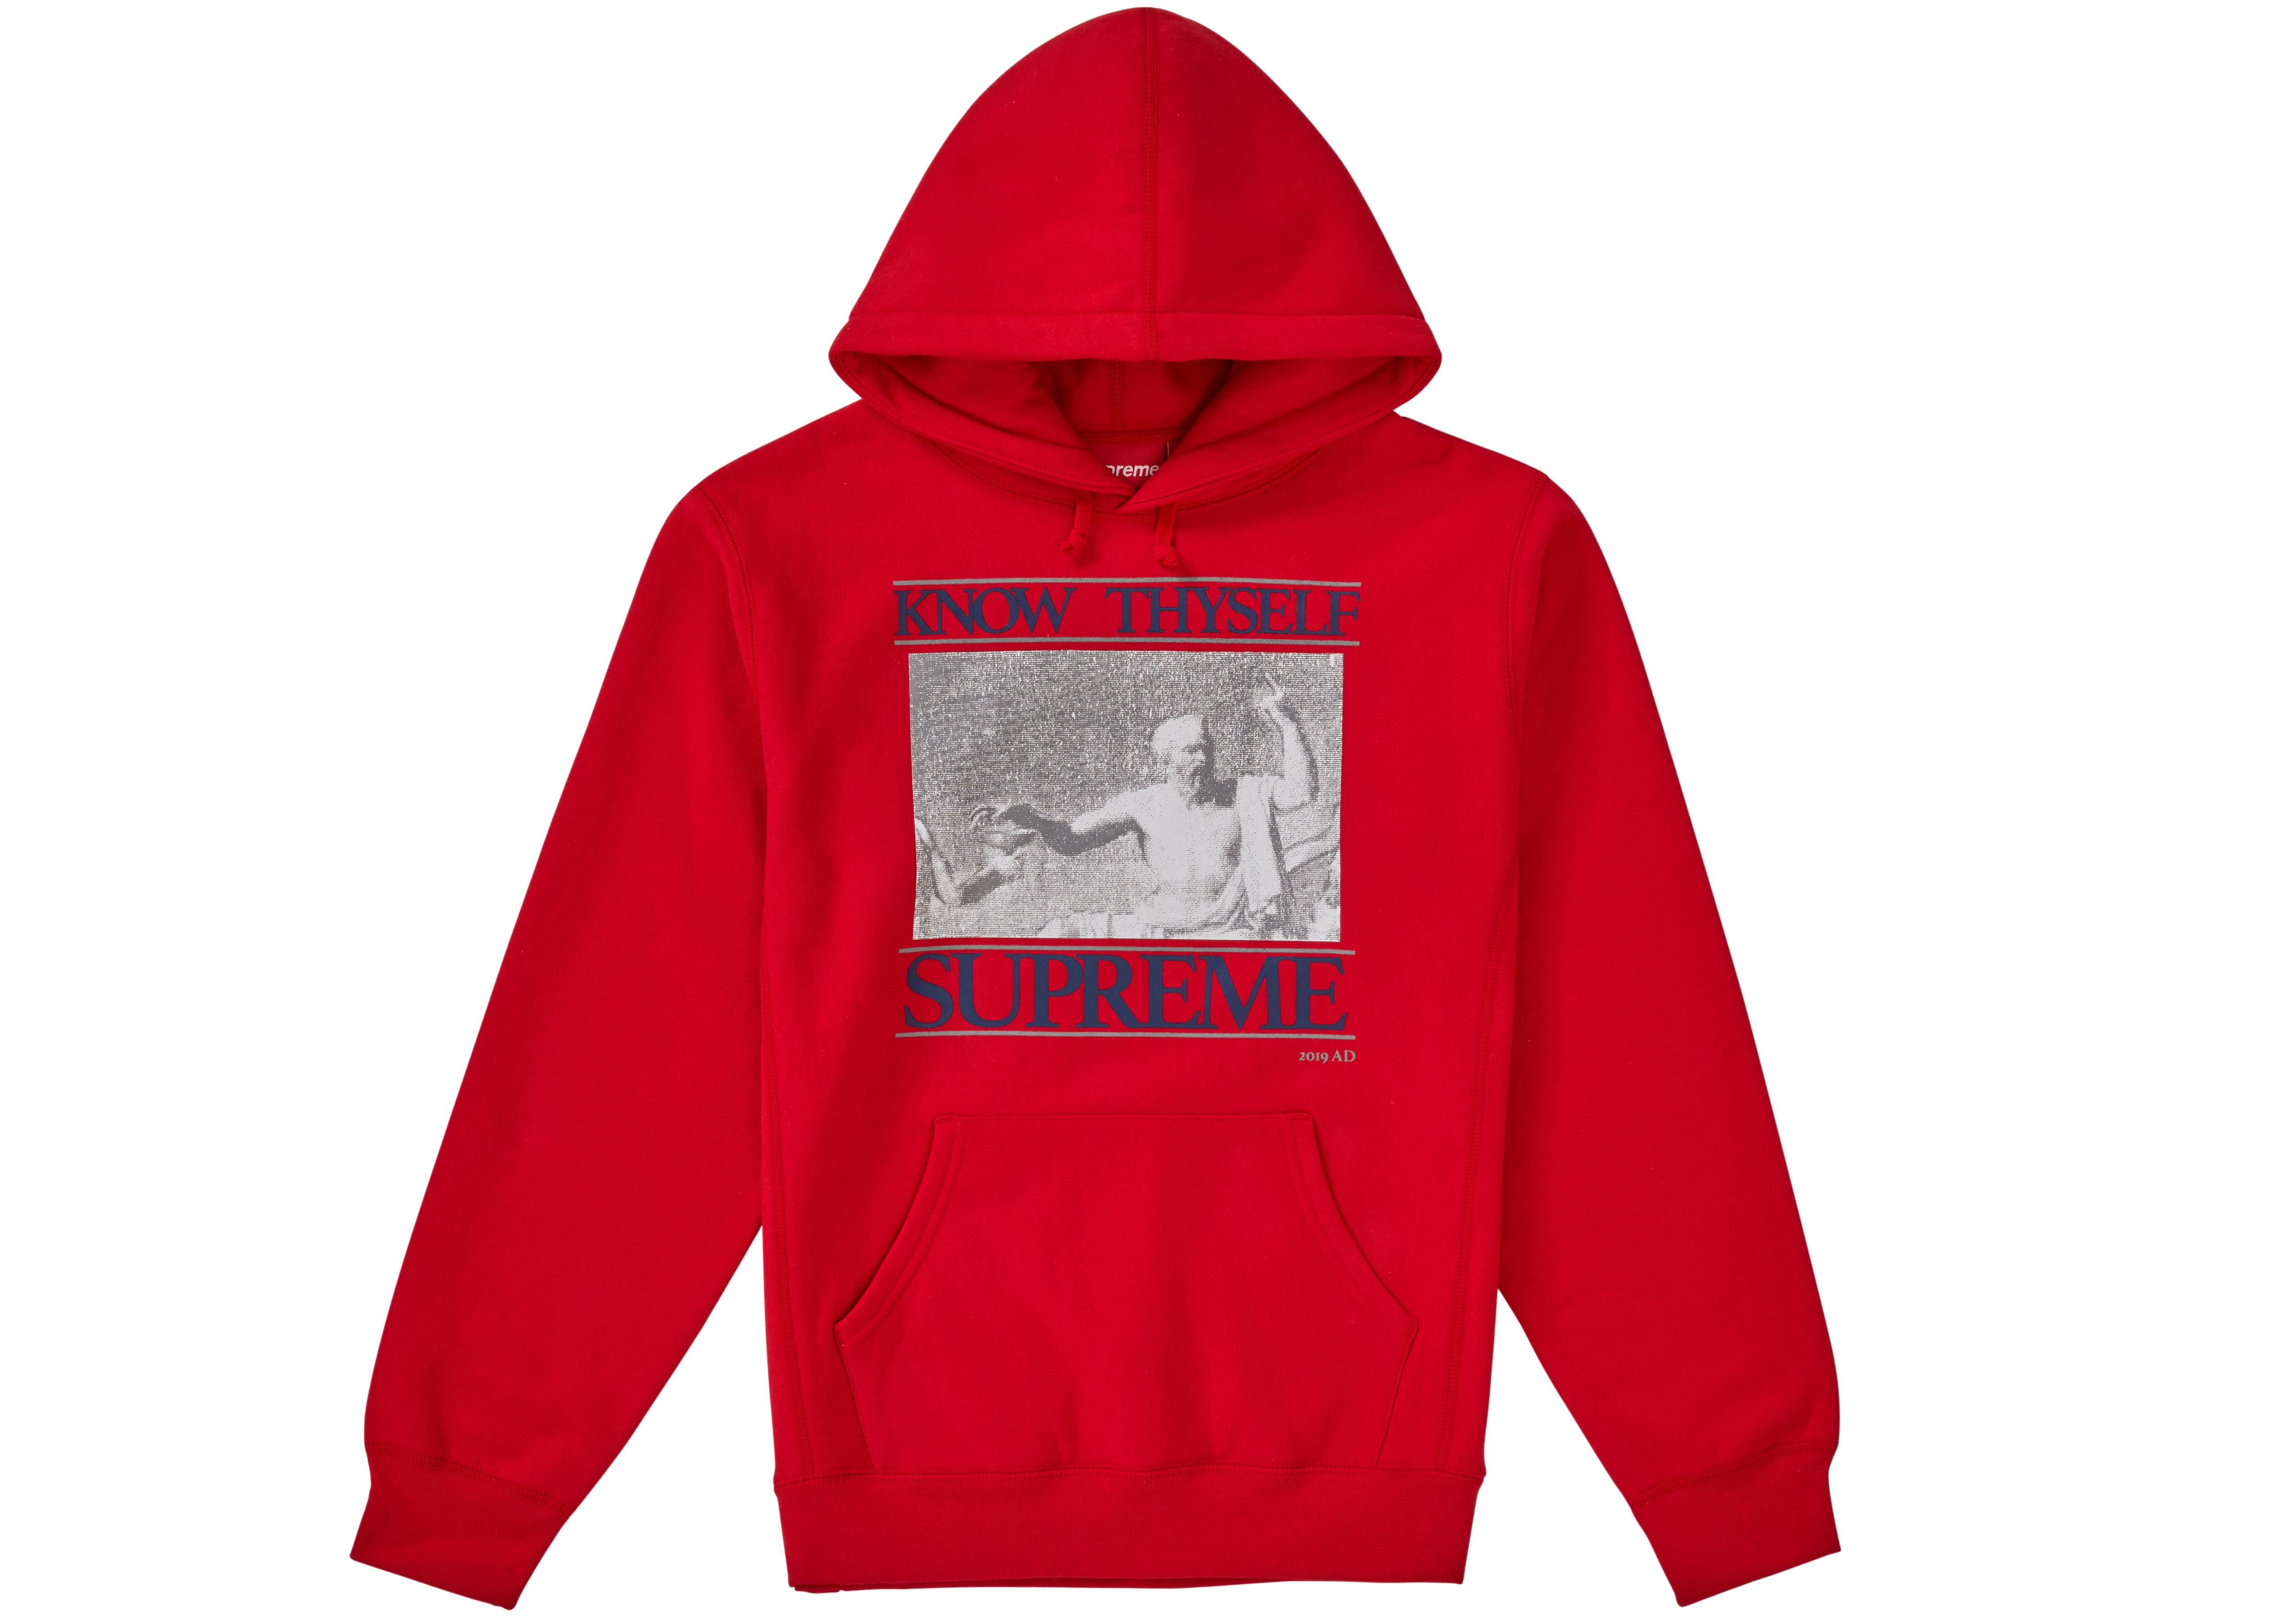 Supreme Know Thyself Hooded Sweatshirt S